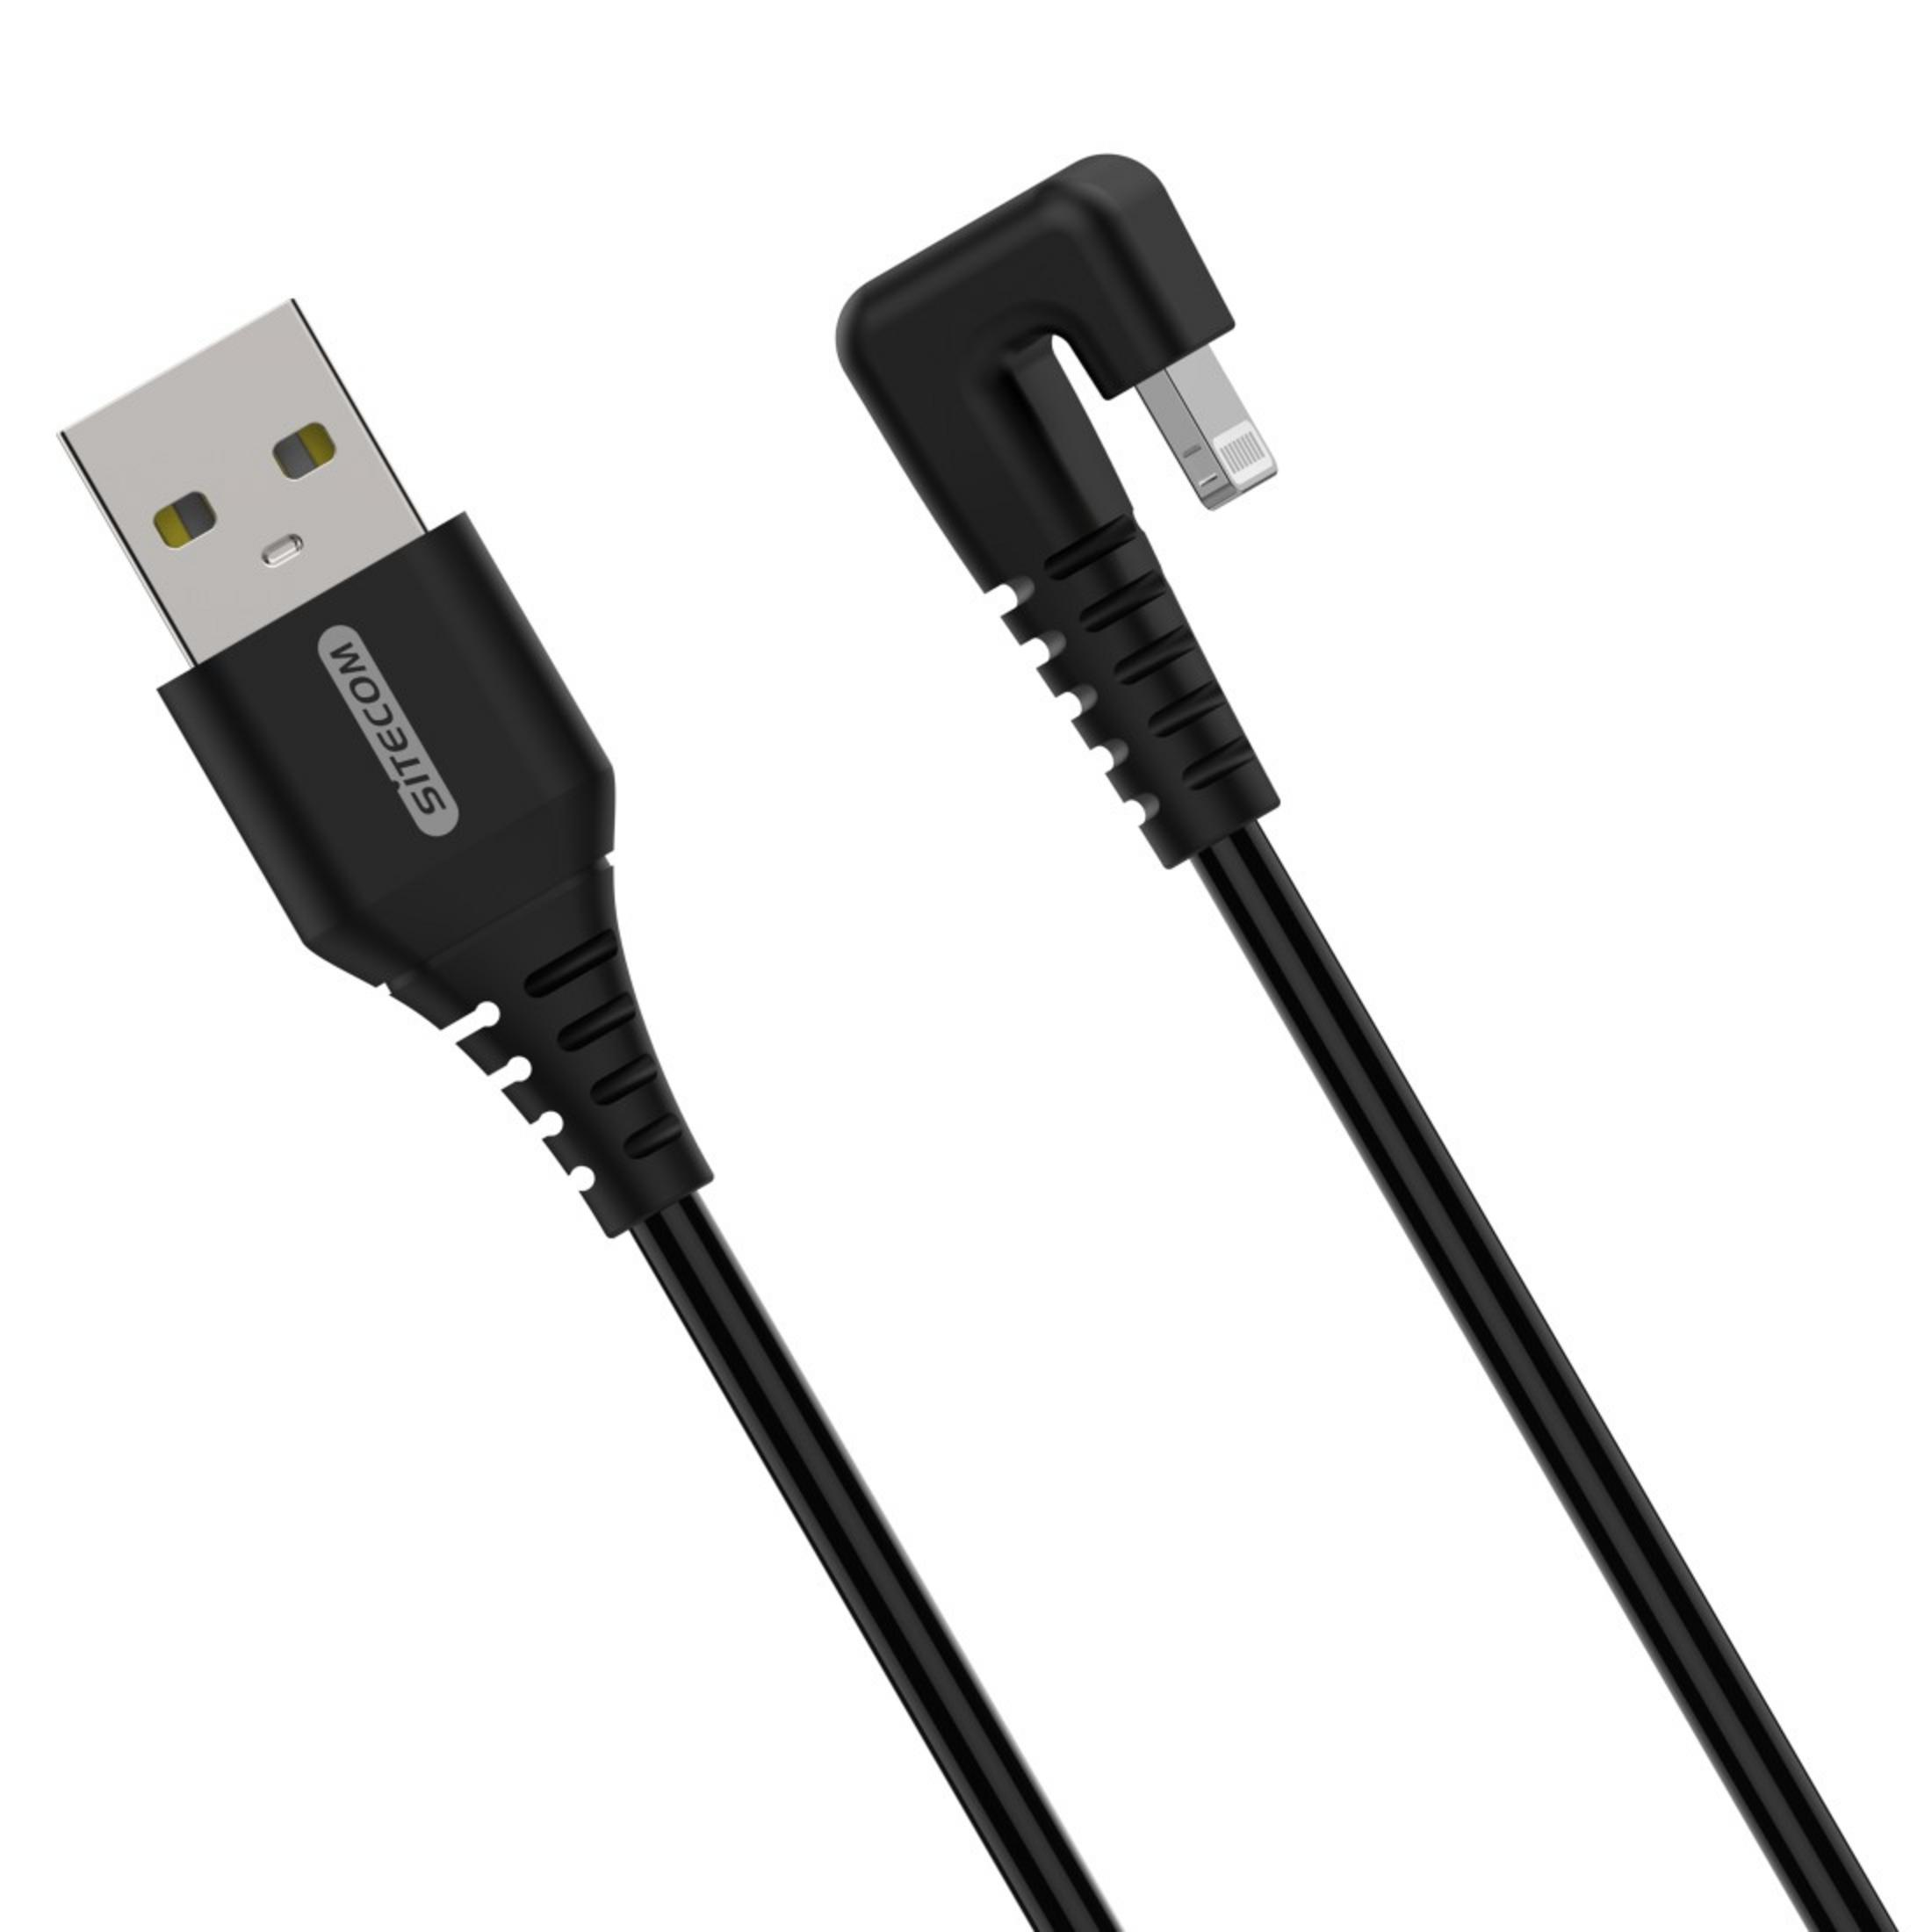 TO SITECOM 2.0 und USB GAME Datensynchronisationskabel Lade- Kabel, CA-039 Lightning USB-A LIGHTN